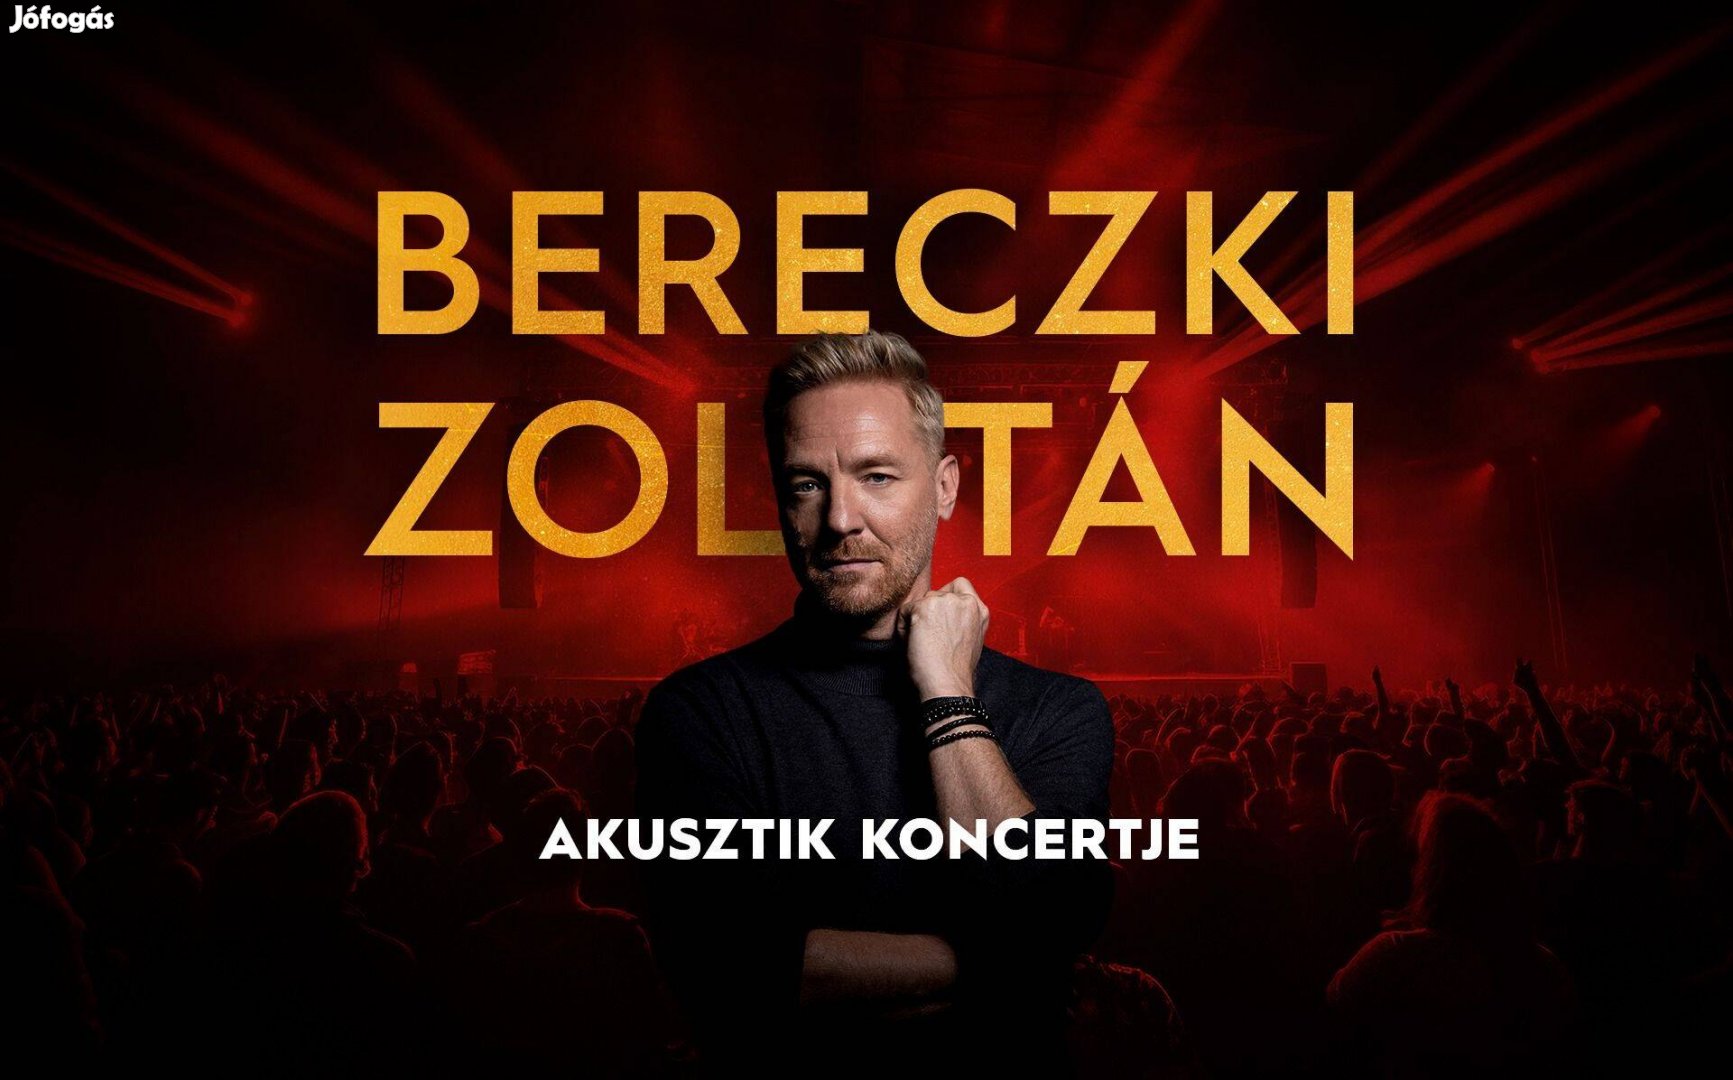 Berezcki Zoltán koncert / Debrecen / 04.21